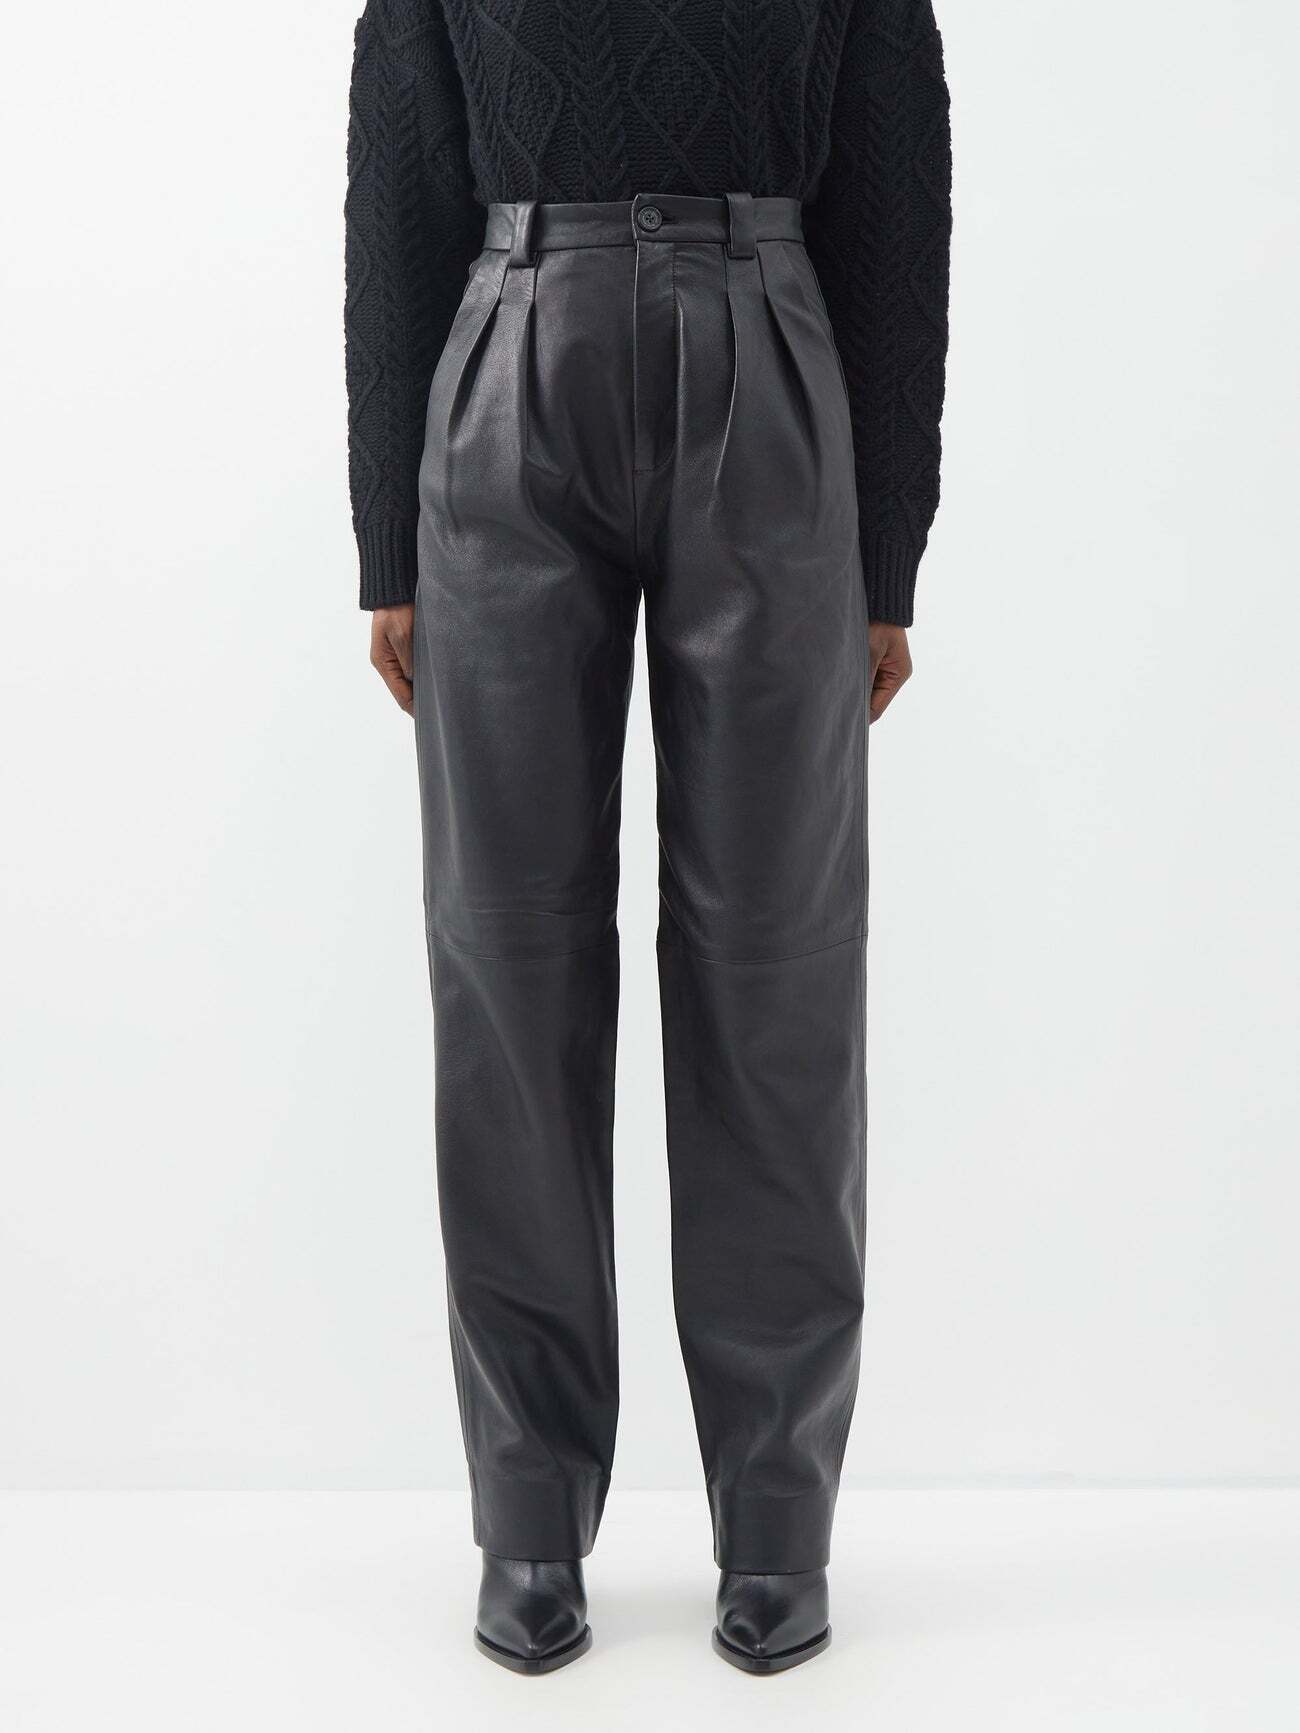 Nili Lotan - Etienne Pleated Leather Trousers - Womens - Black